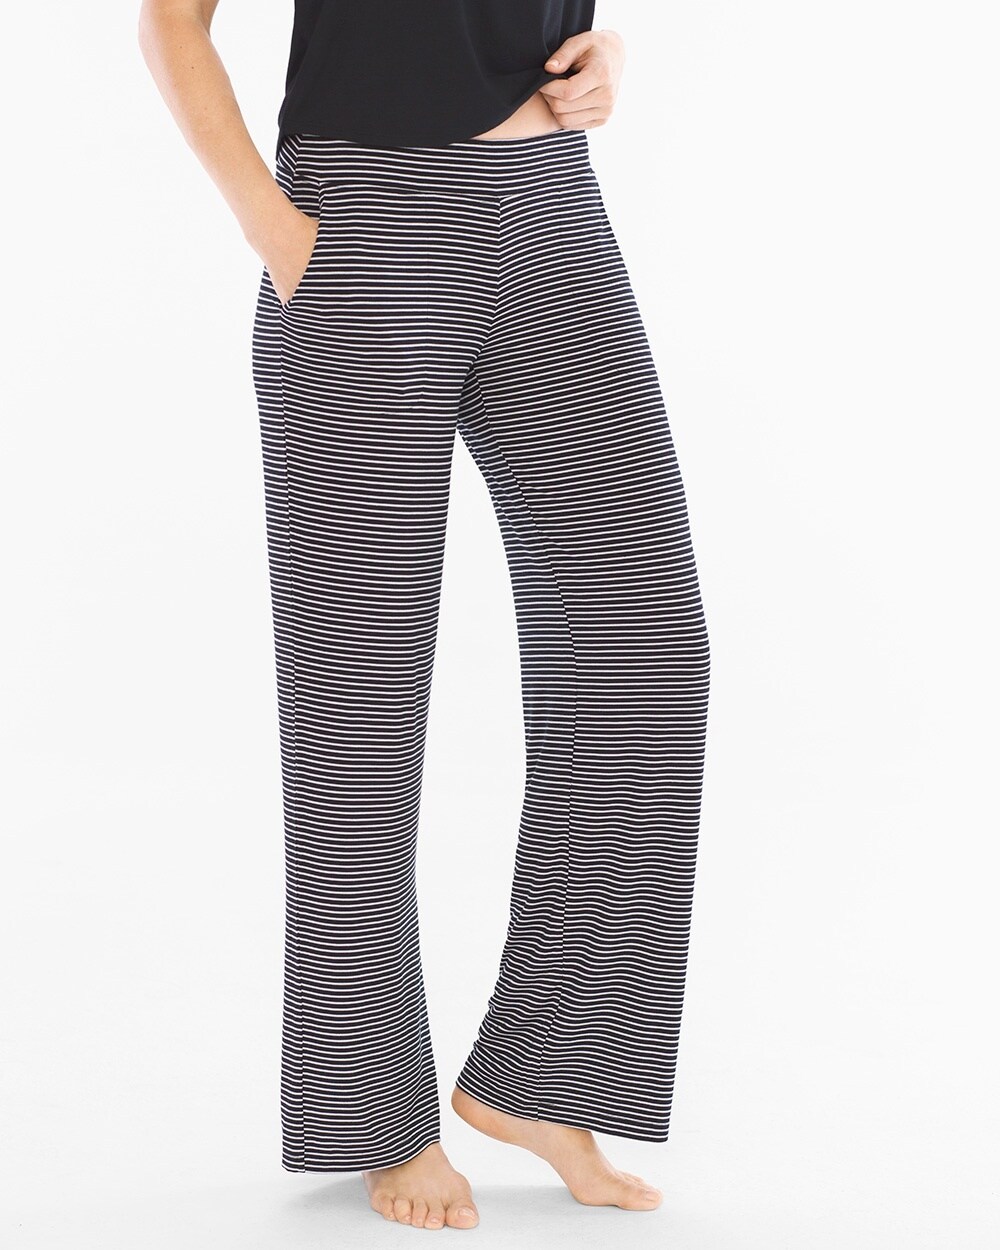 Cool Nights Pajama Pants Infinite Stripe Black TL